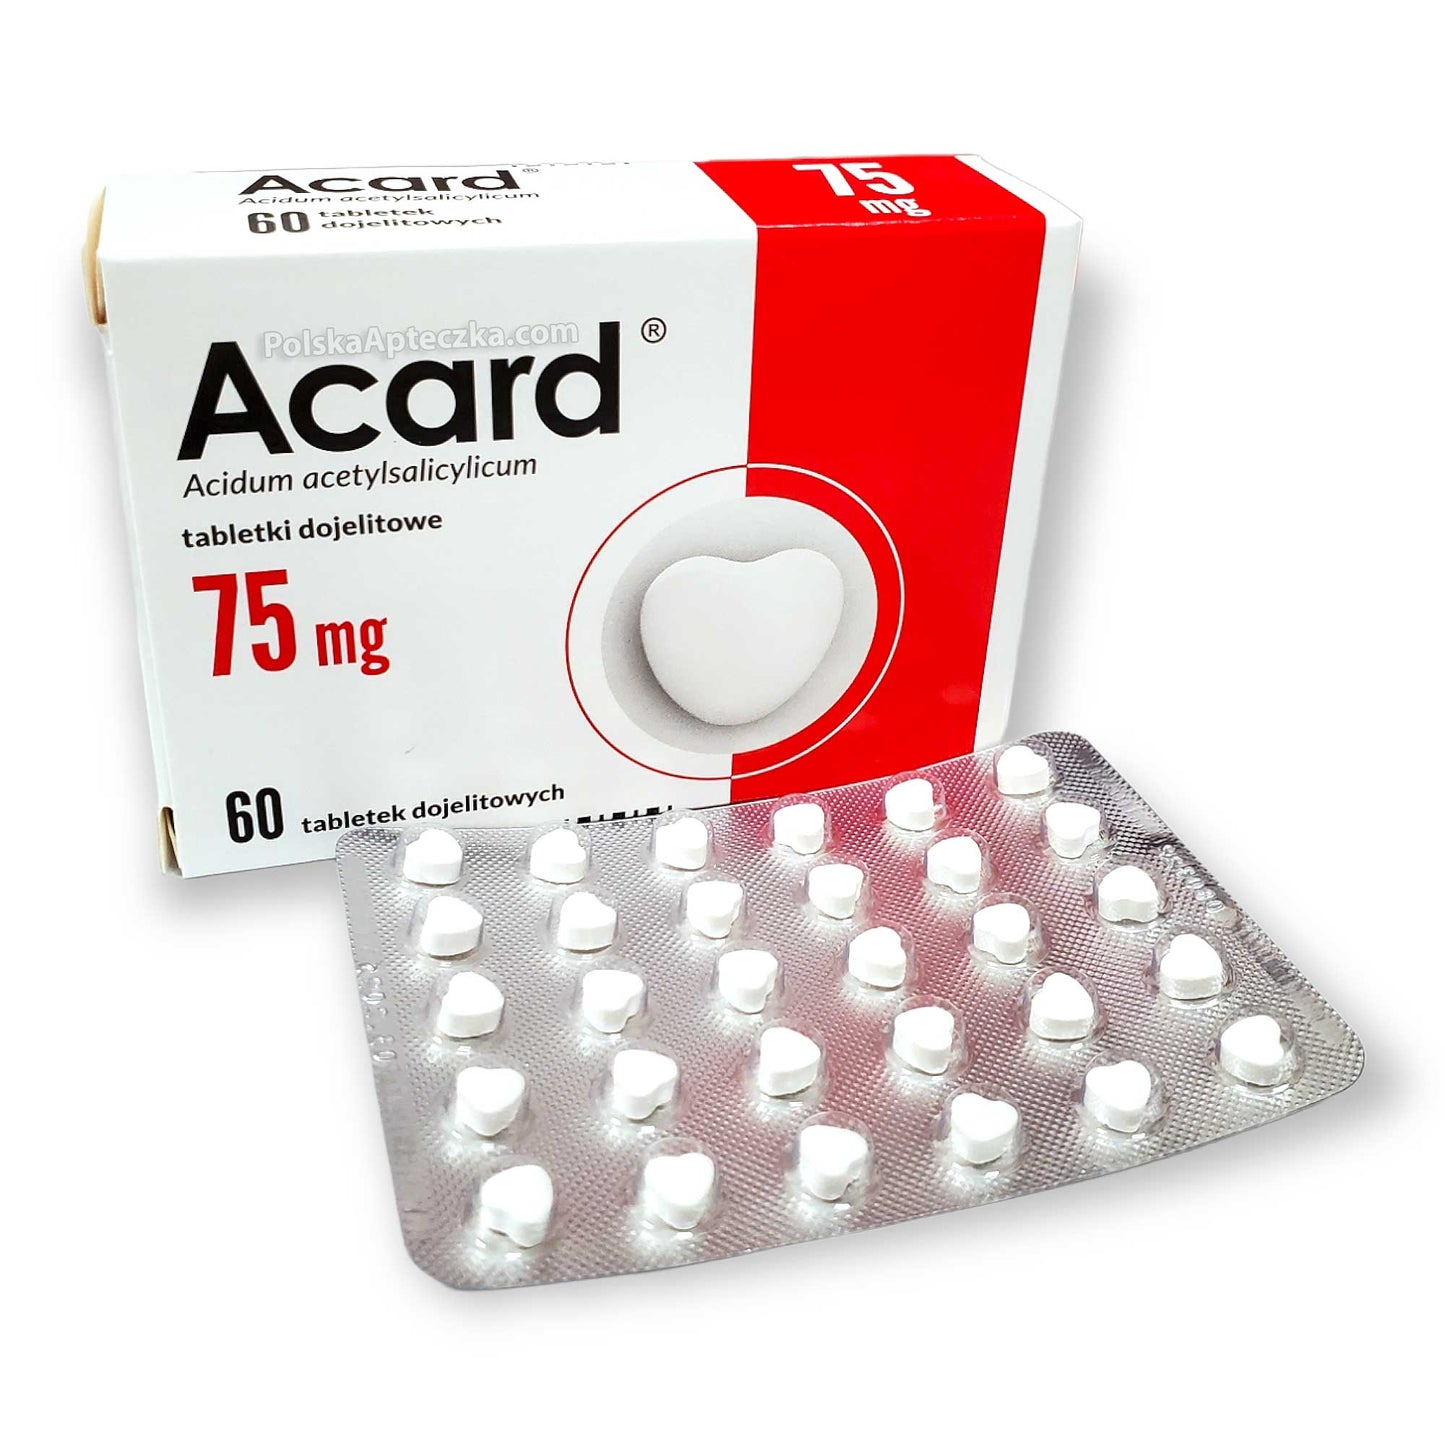 acard 75mg tablets polska apteka chicago